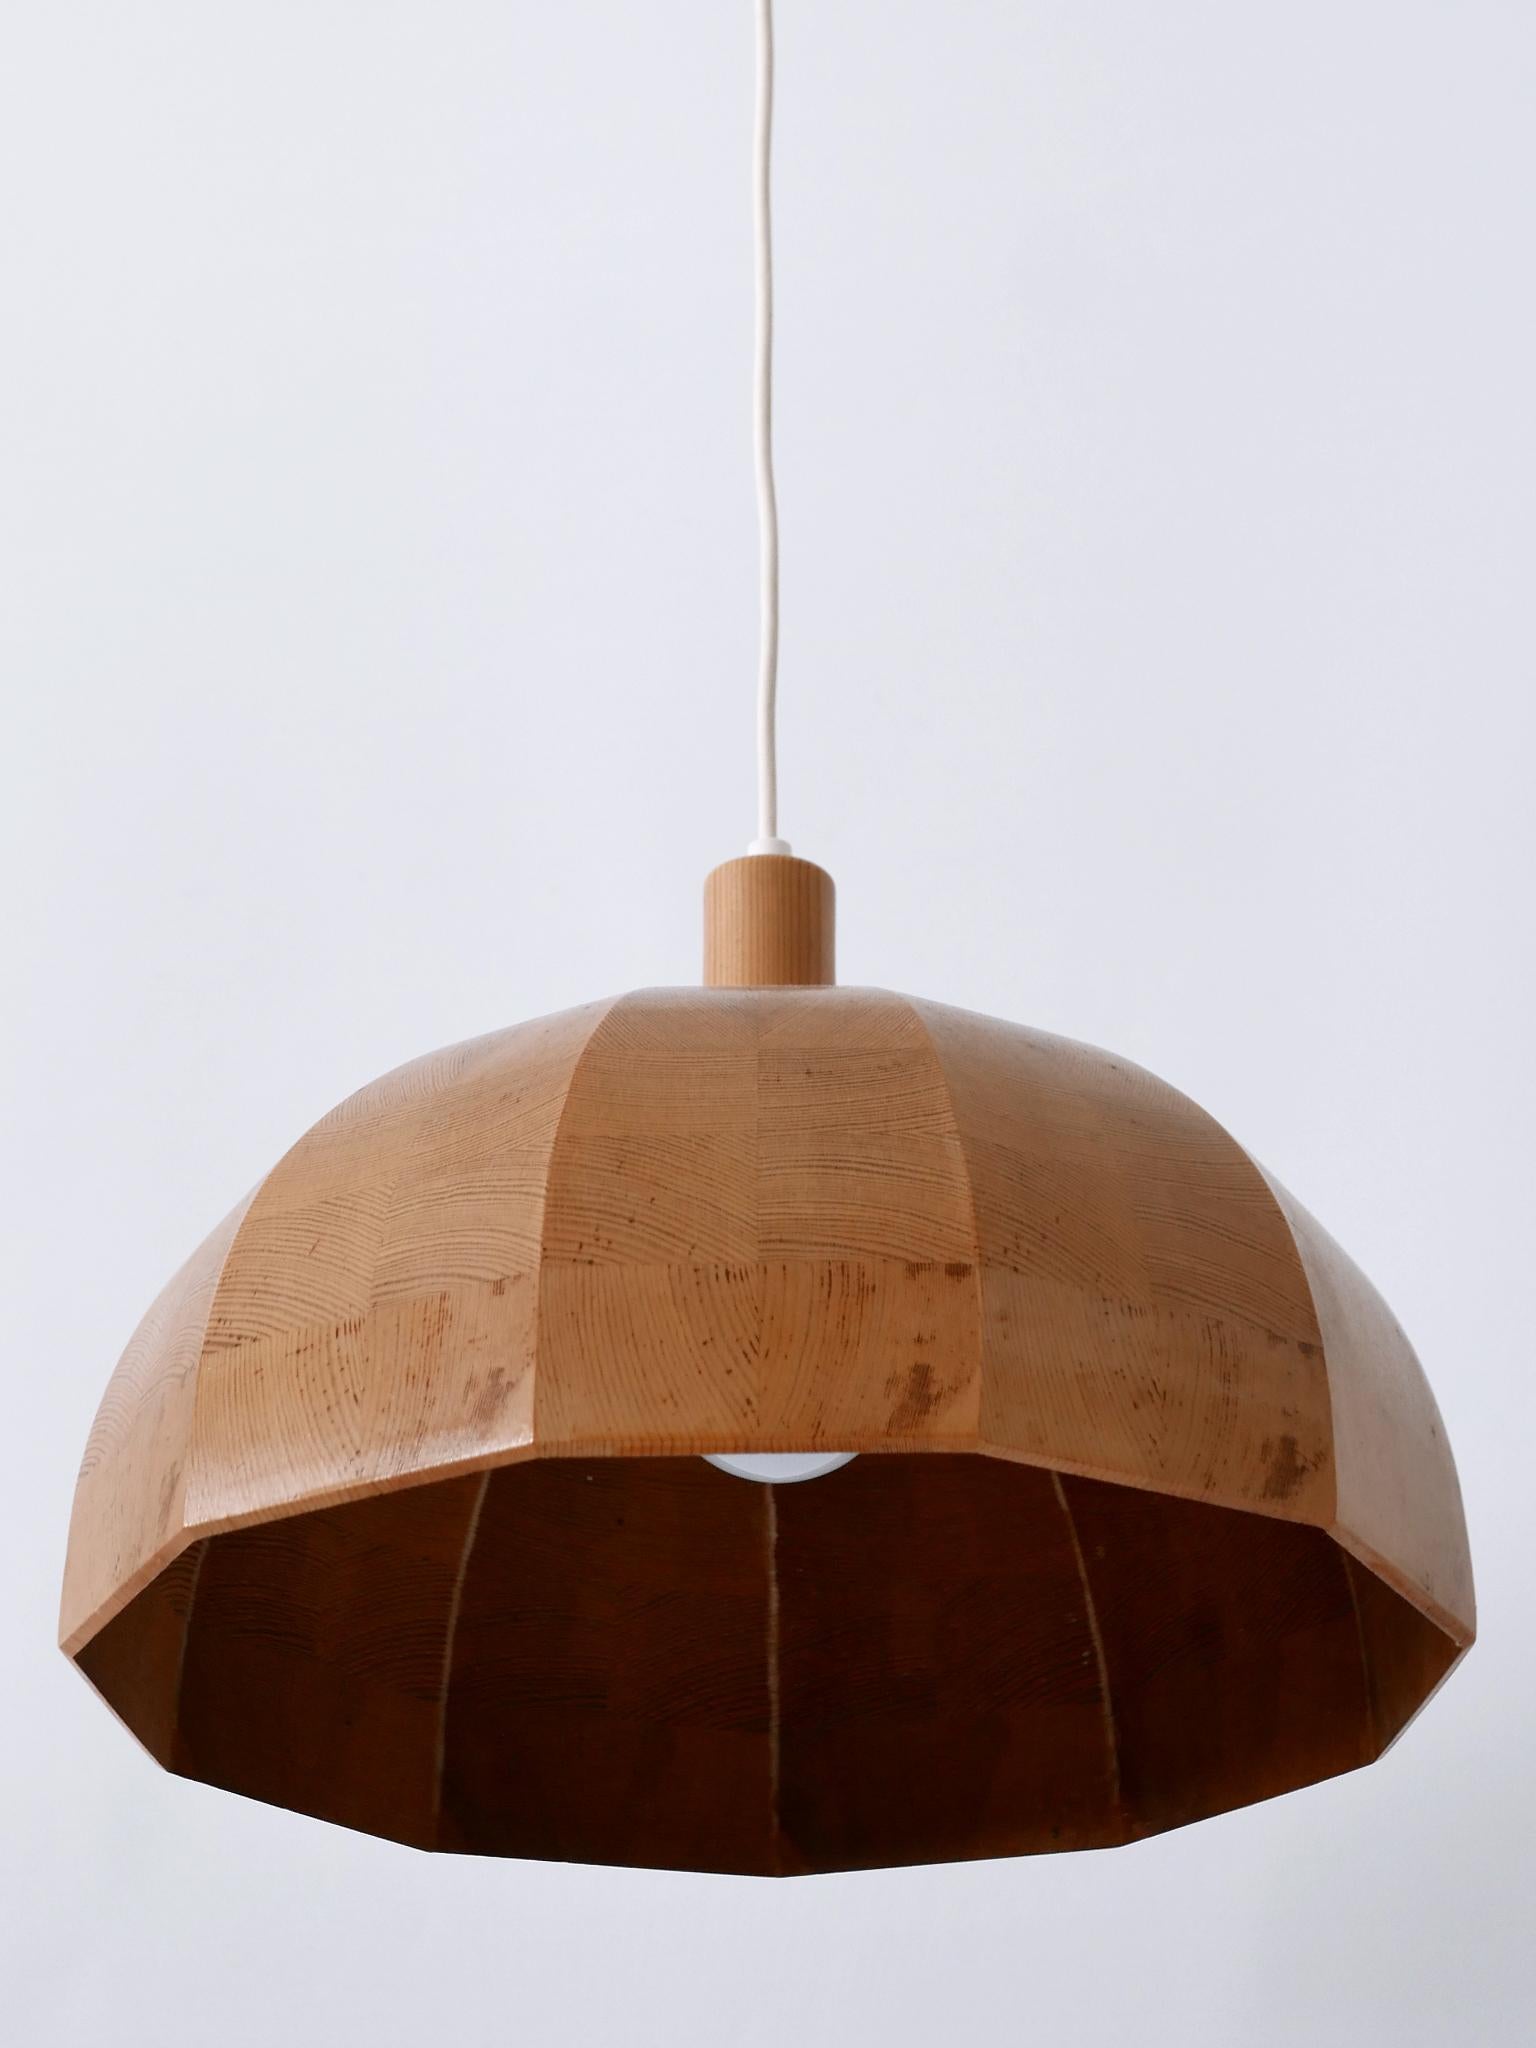 Rare Mid-Century Modern Pine Wood Pendant Lamp or Hanging Light Sweden, 1960s For Sale 6